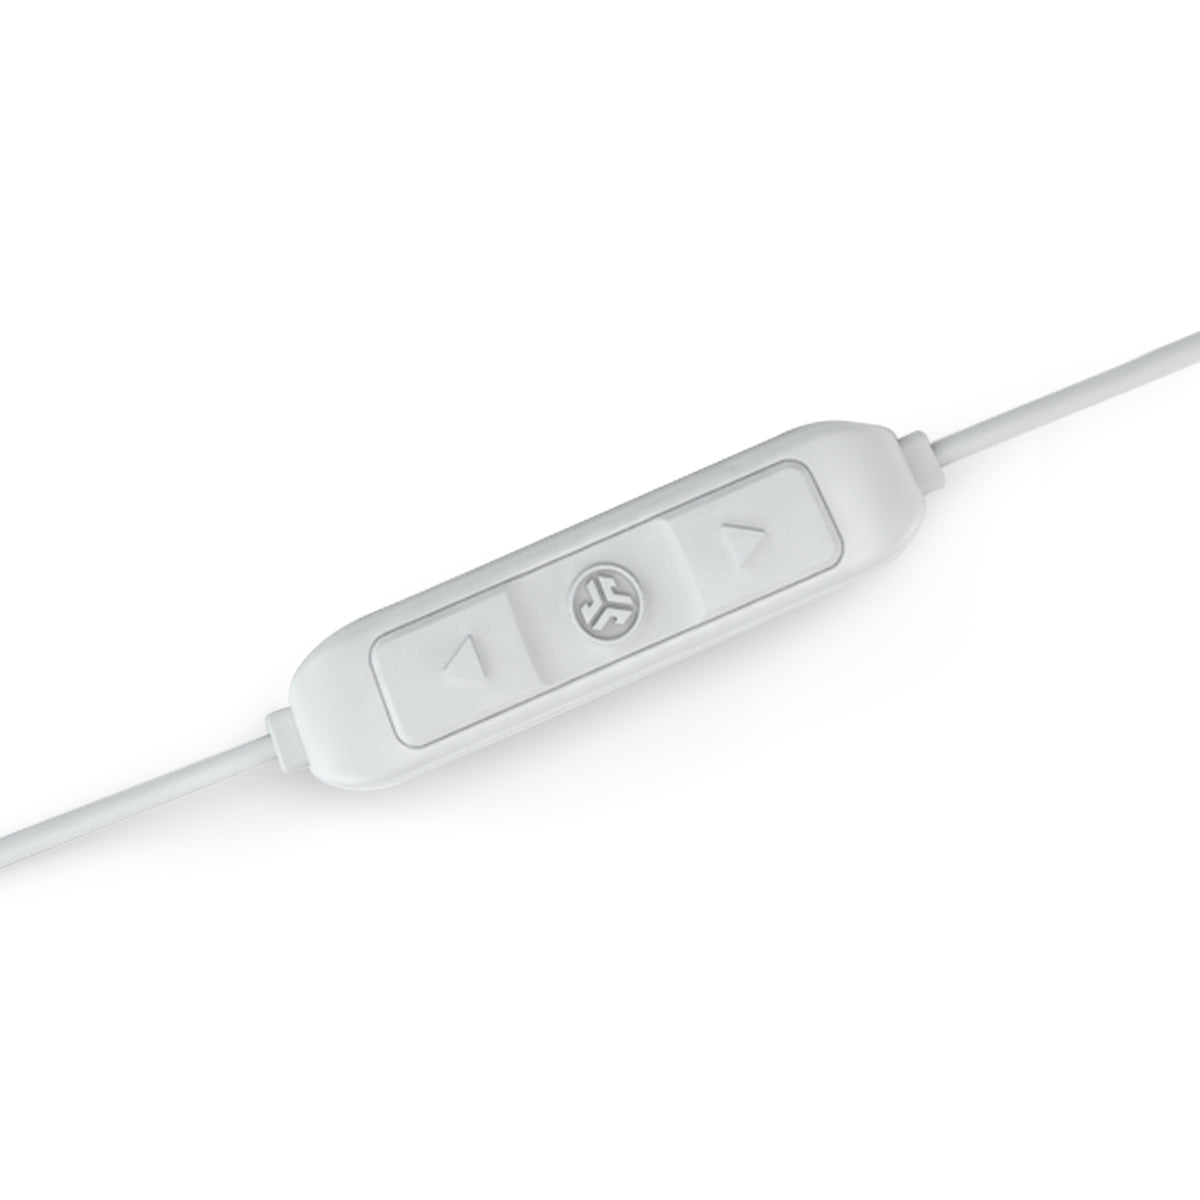 JBuds Pro Wireless Signature Earbuds White / Grey